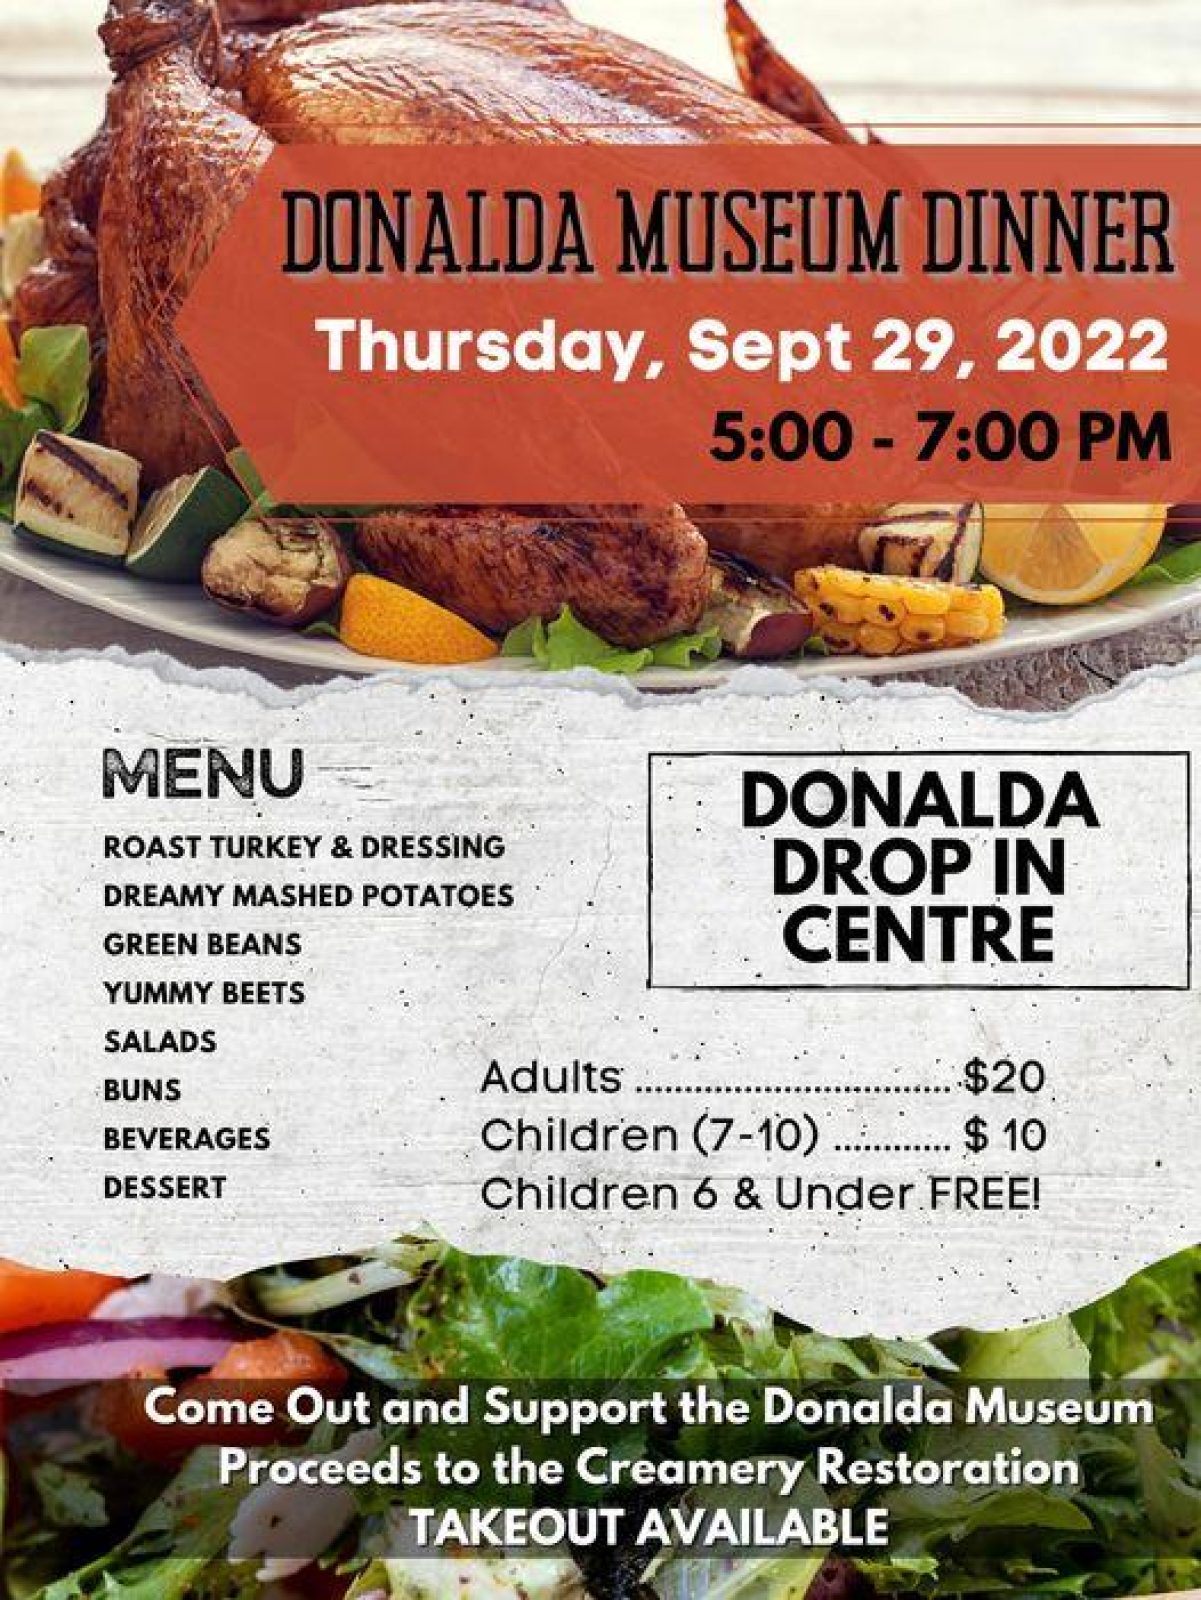 Donalda museum dinner